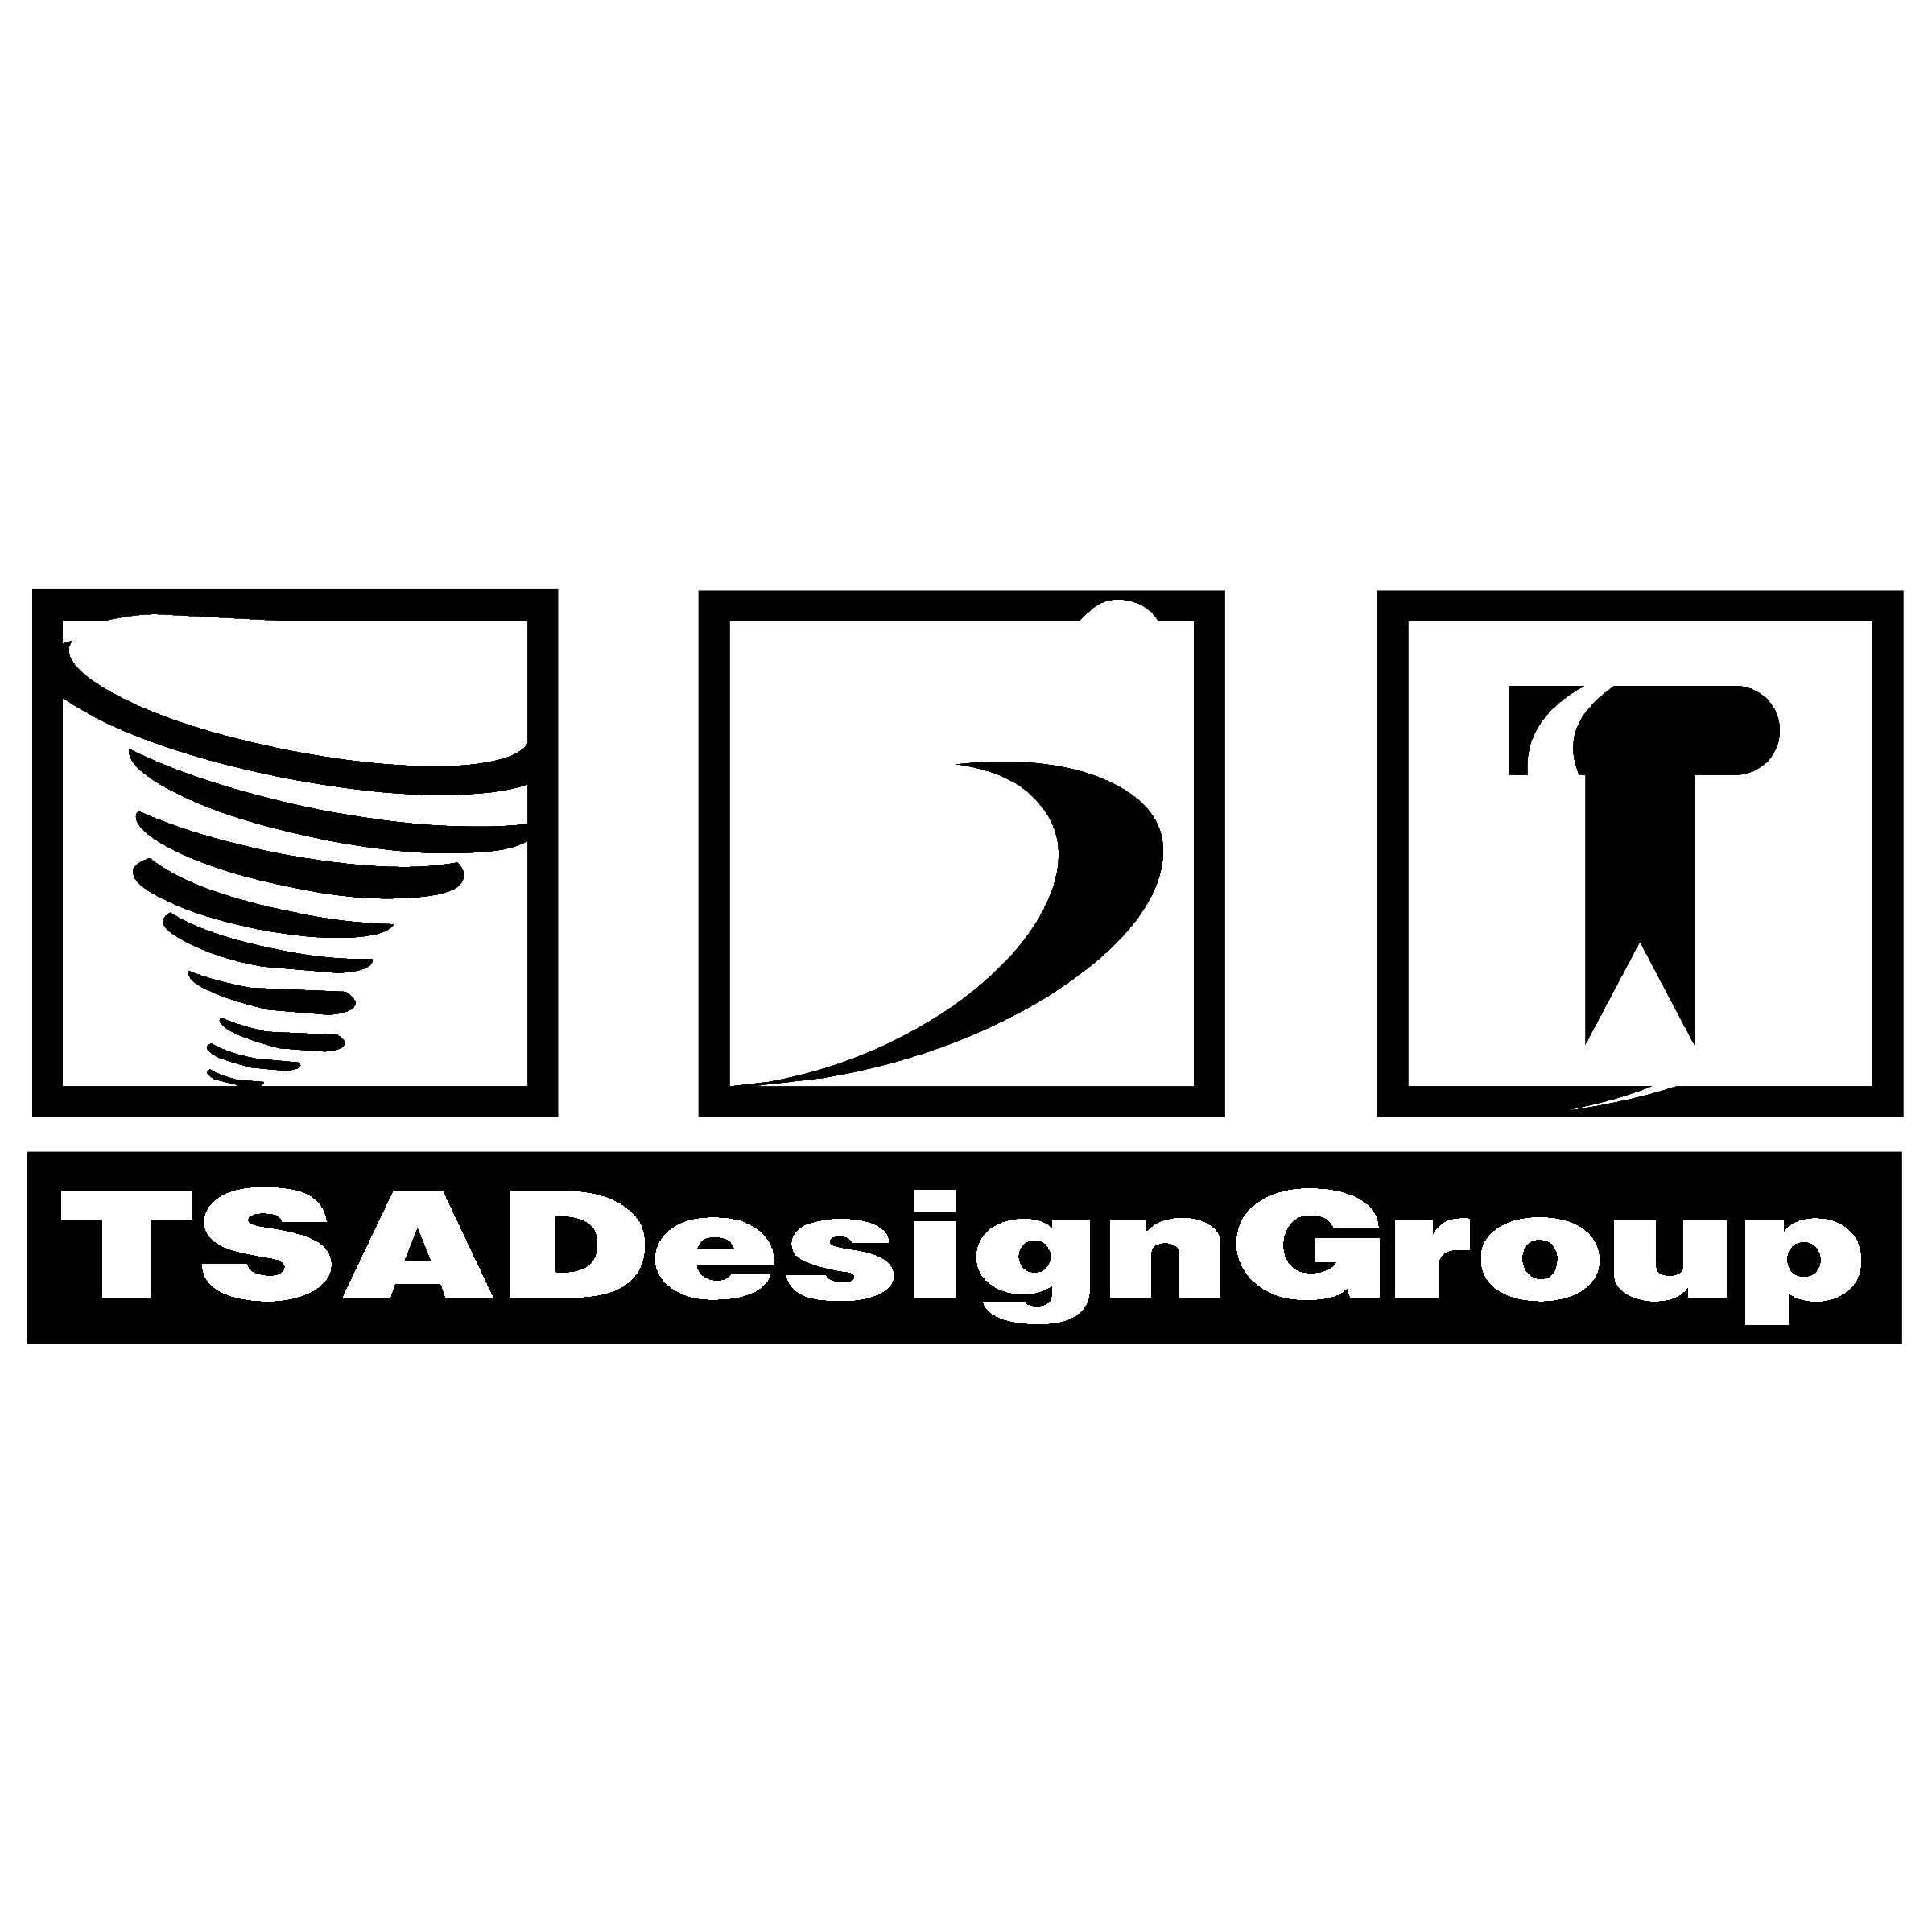 Black and White TSA Logo - TSA Design Group Logo PNG Transparent & SVG Vector